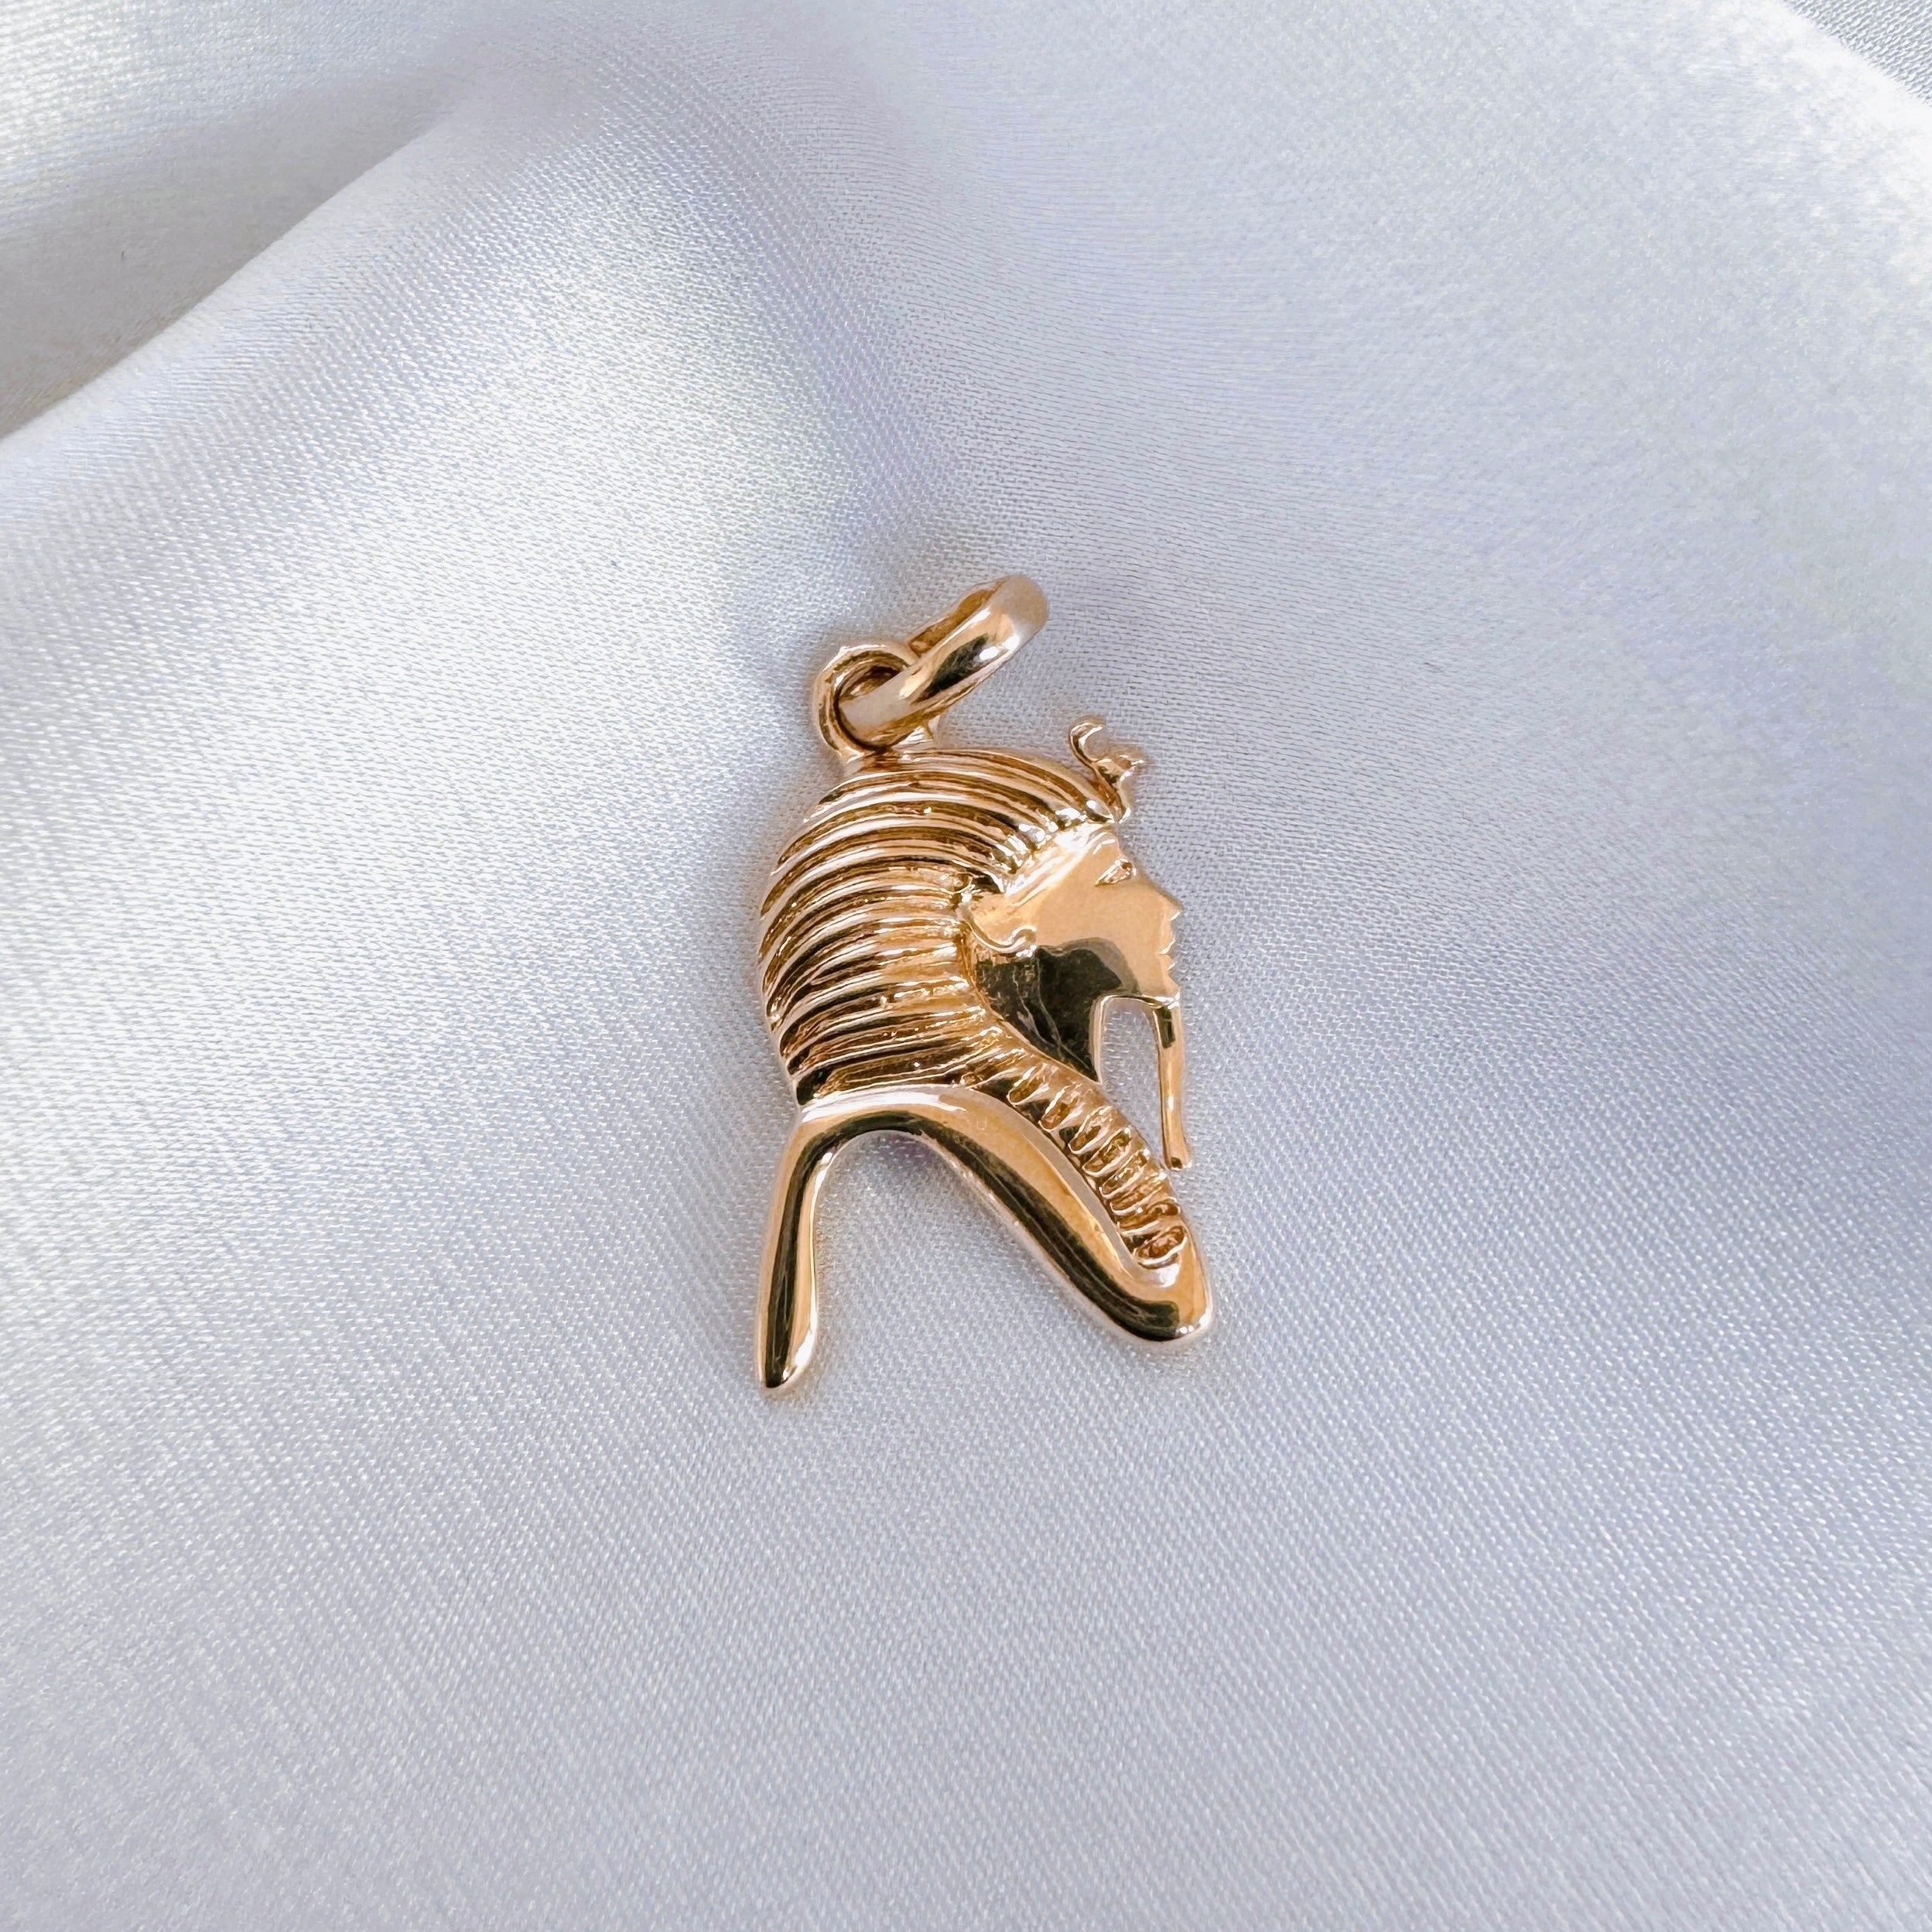 Gold-plated “Pharaoh” pendant